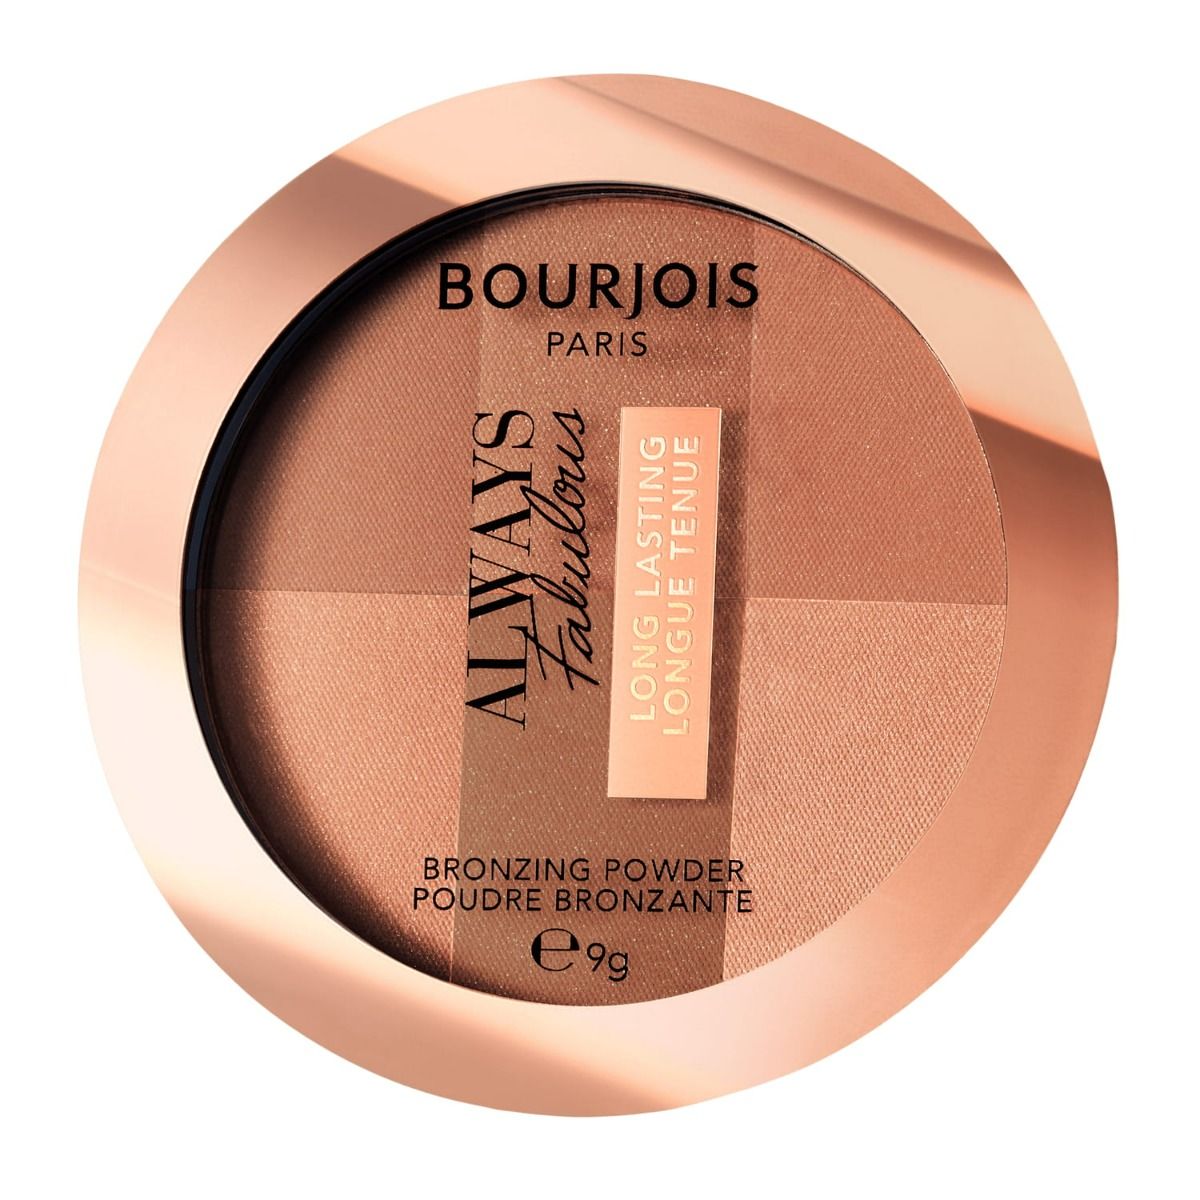 Bourjois Always Fabulous бронзатор для лица, 9 g